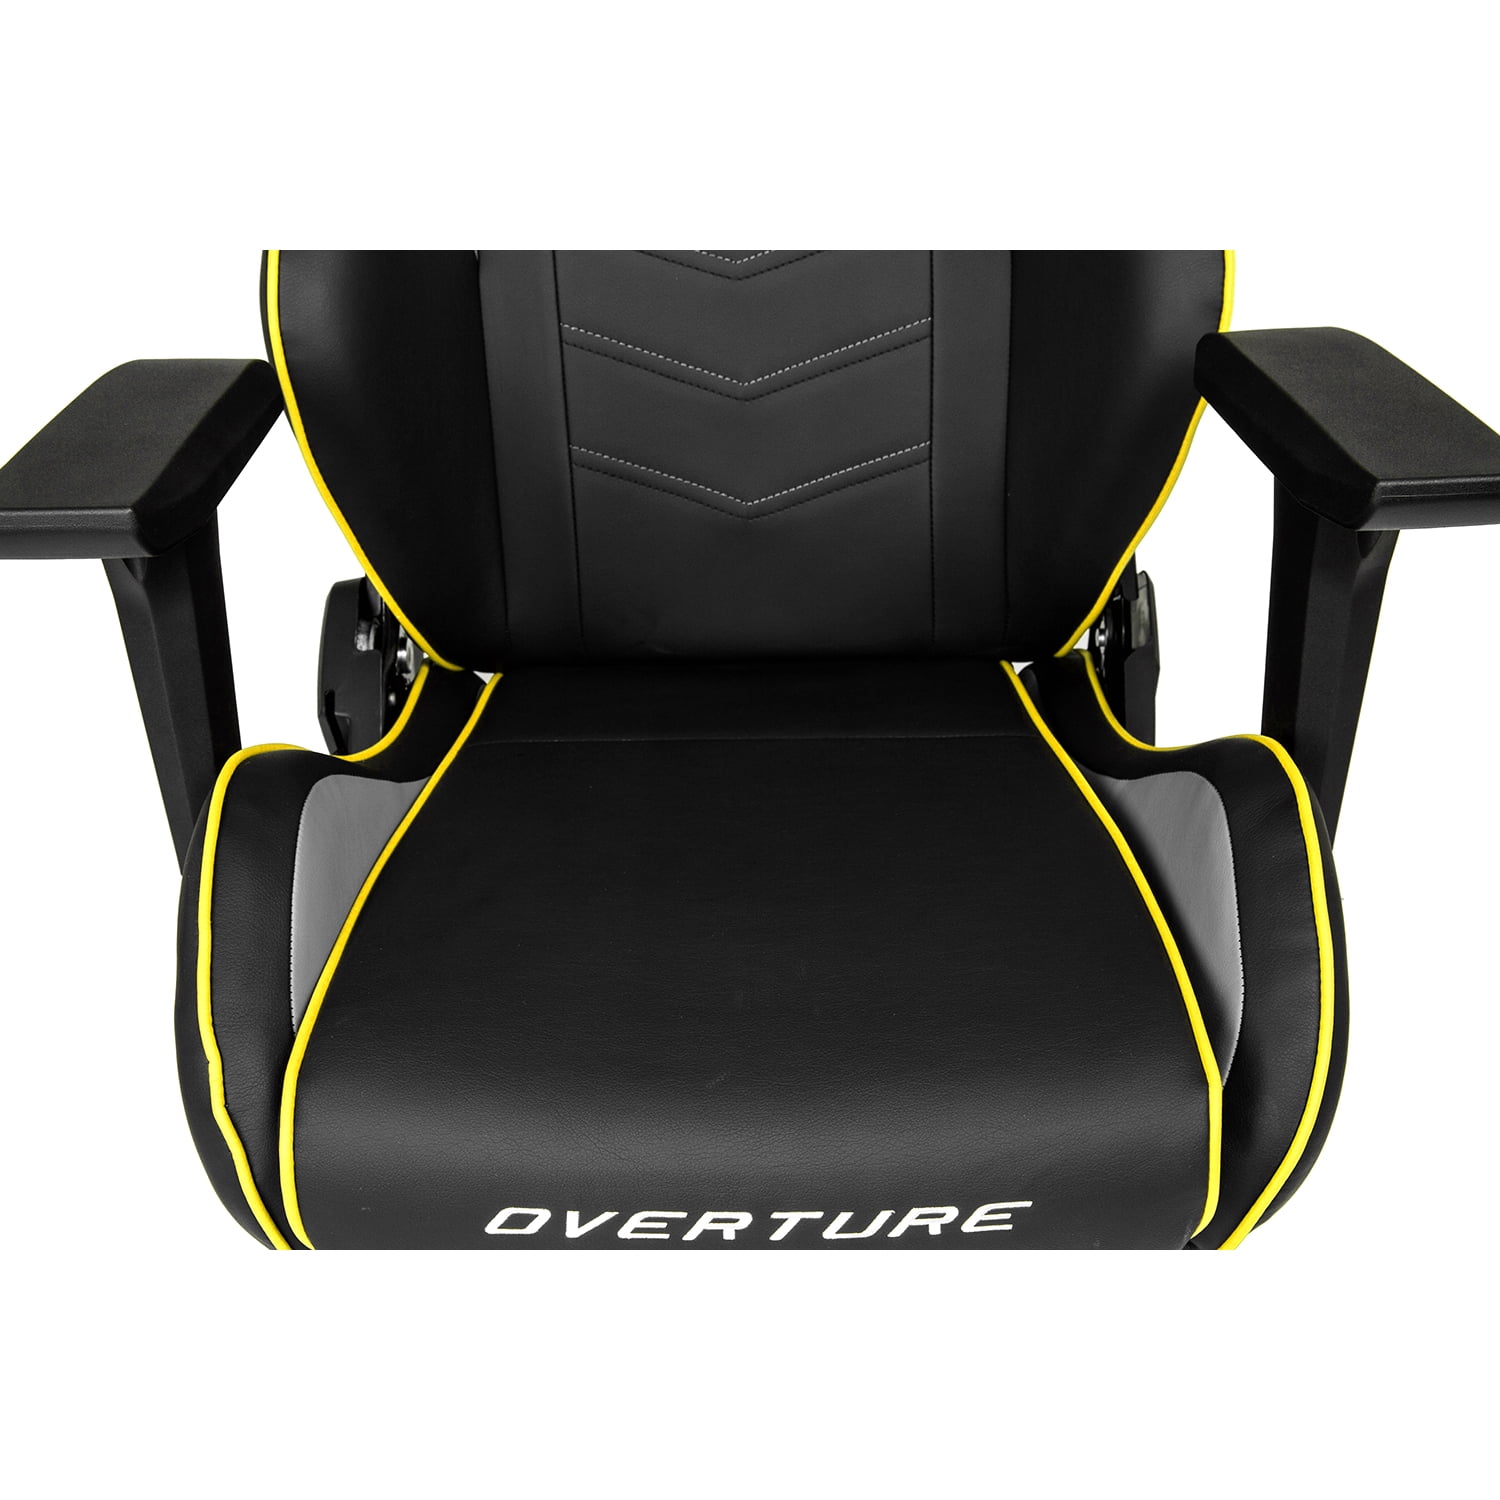 AKRacing Overture Gaming Chair, Yellow - Walmart.com